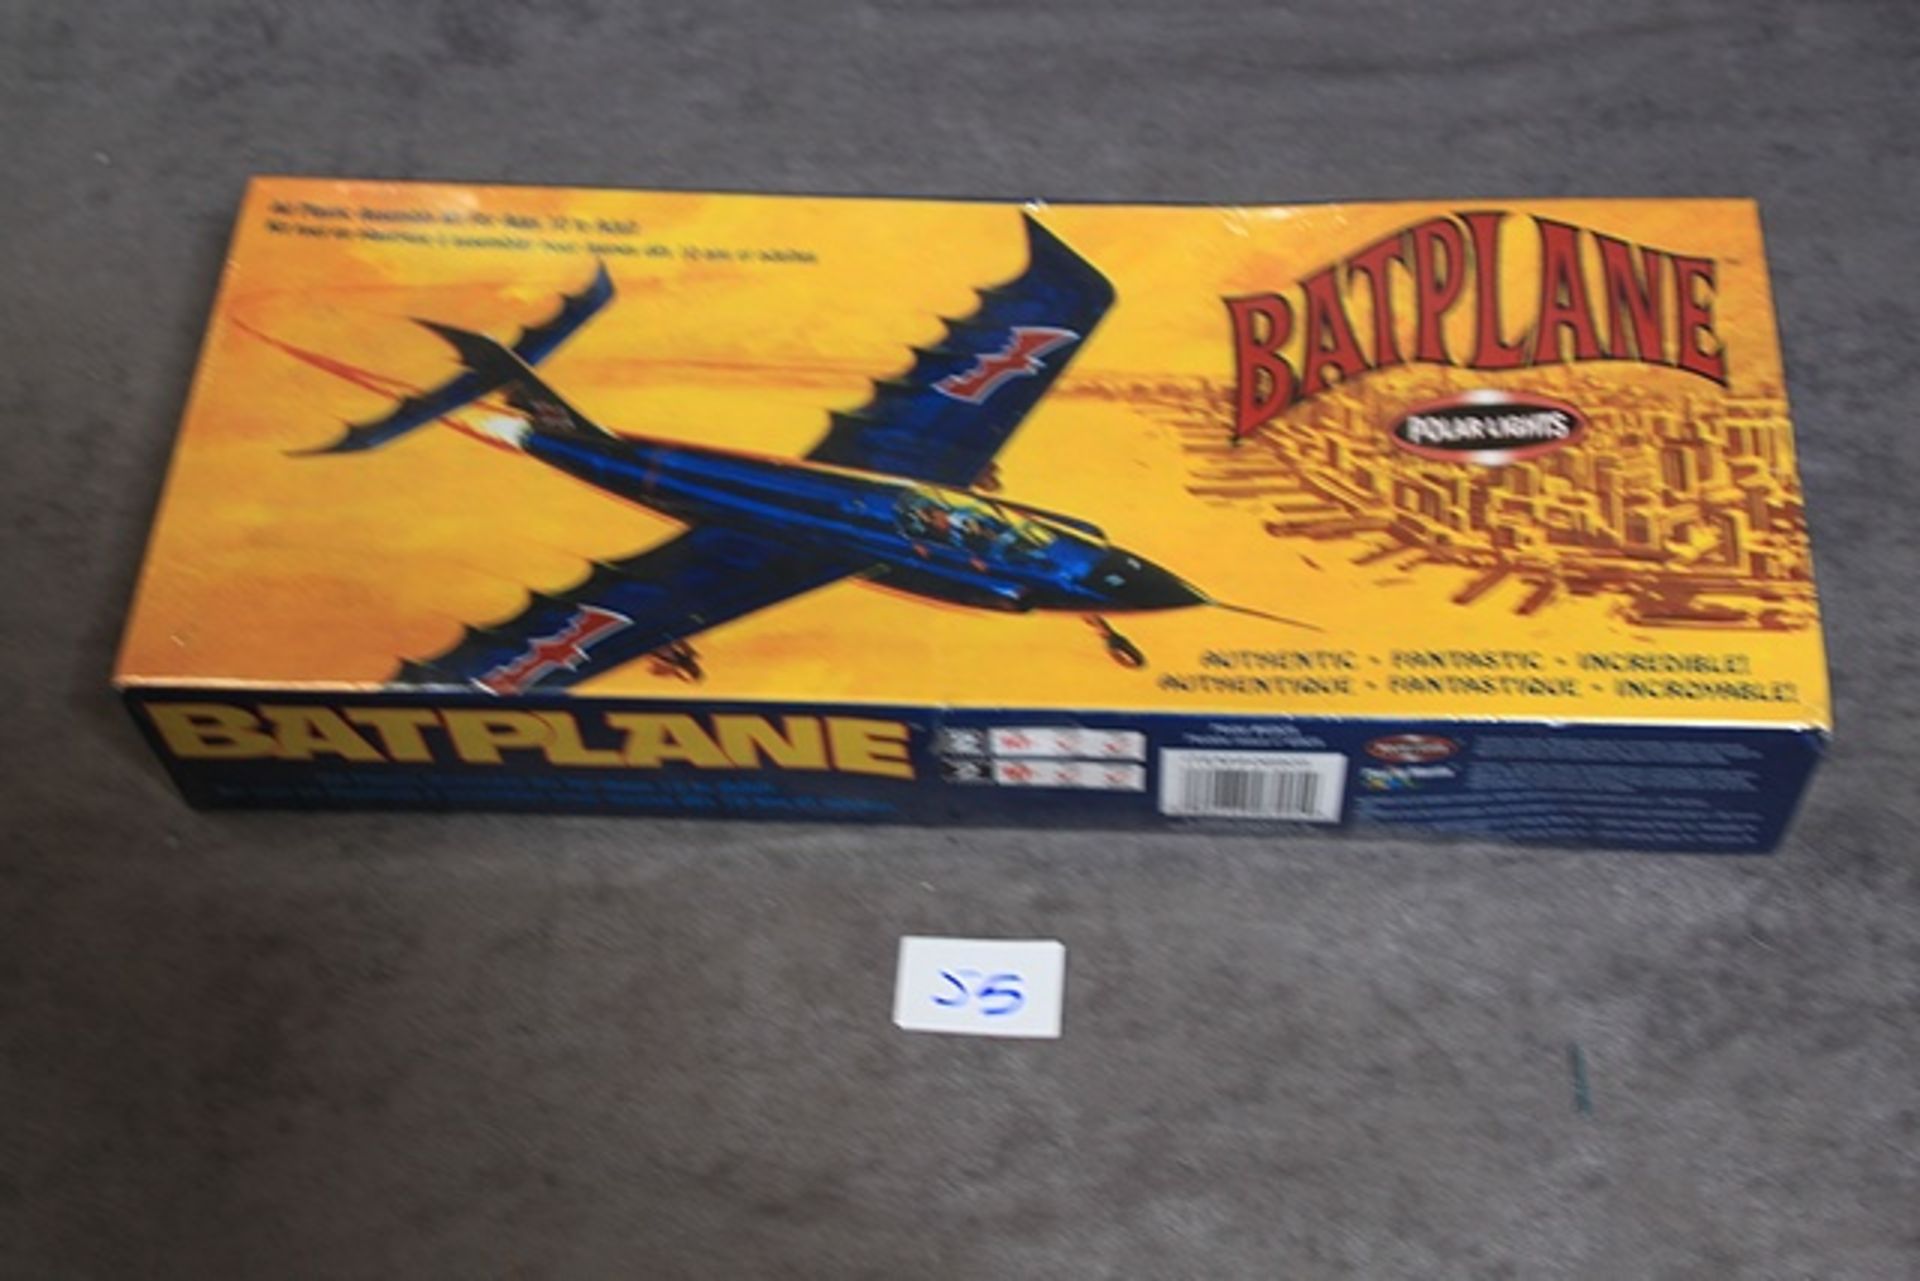 Polar Lights Batman Bat Plane Plastic Model Kit # 6905 Factory Sealed Adam Westkit that was released